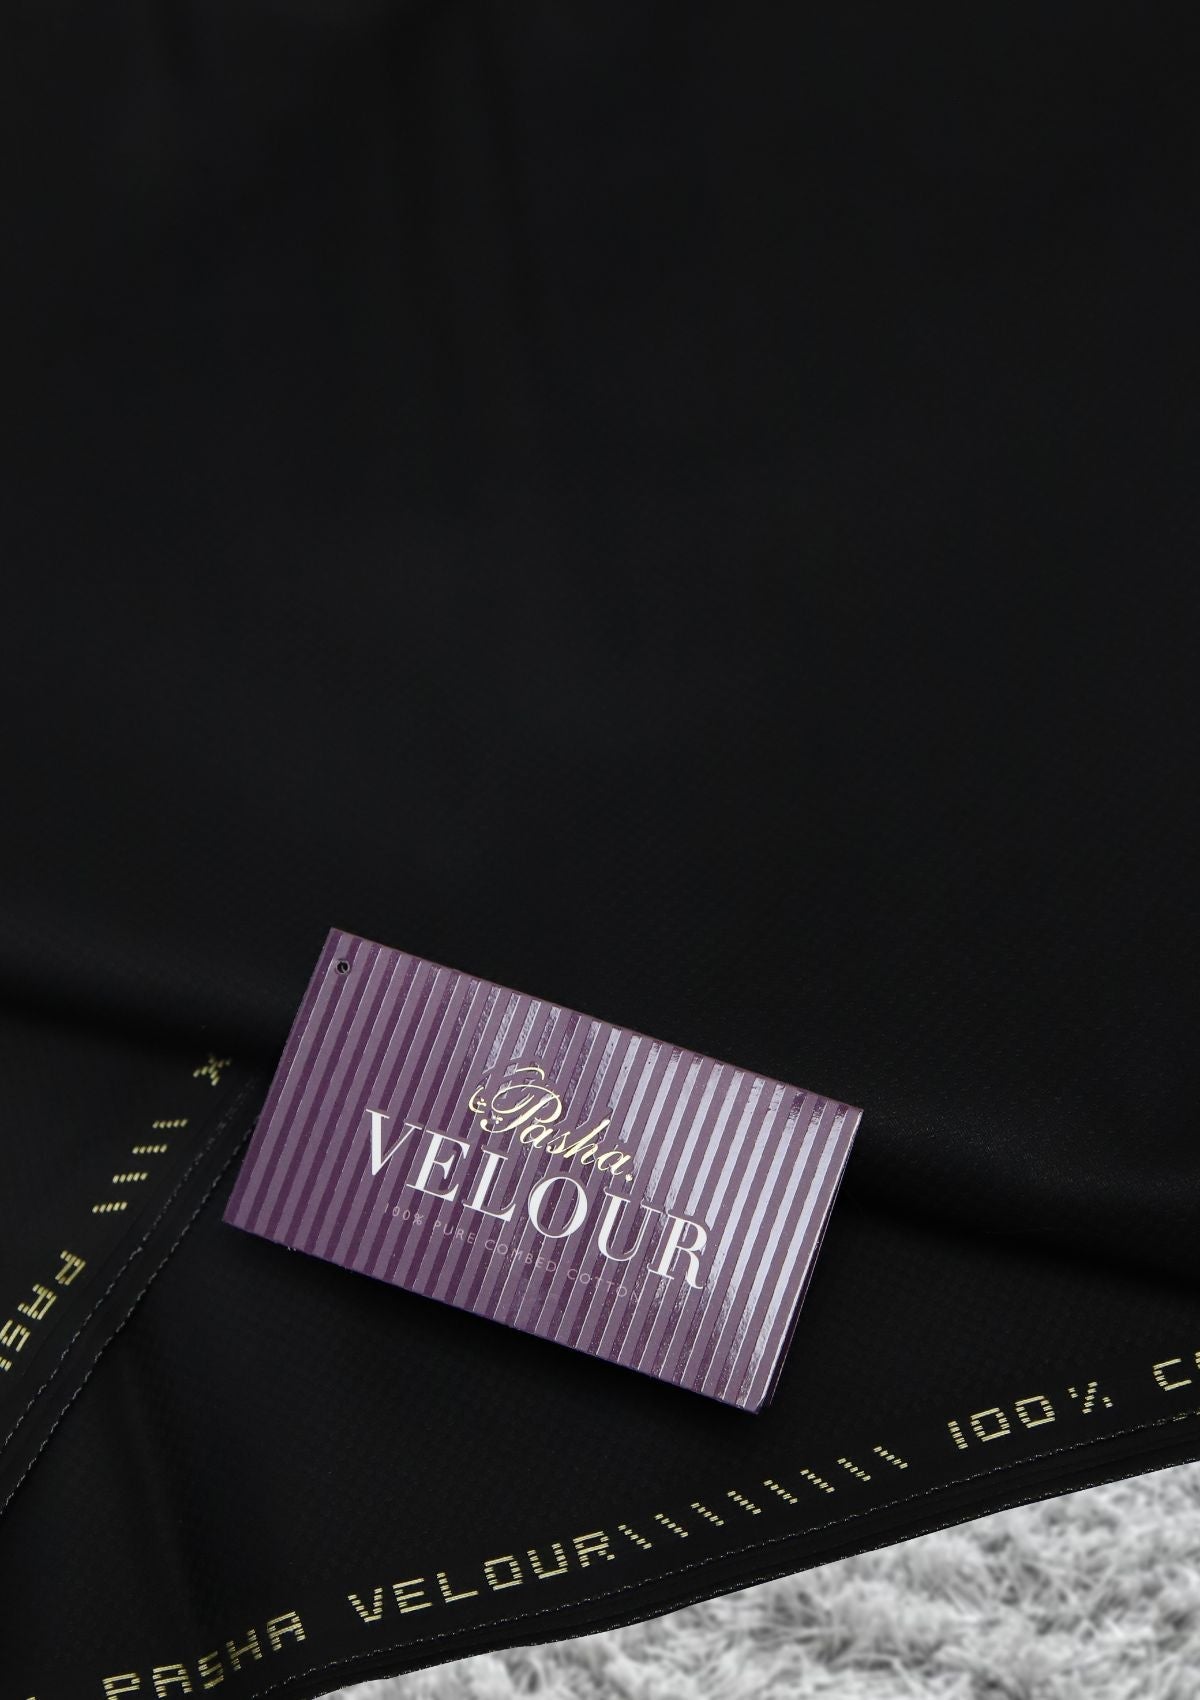 Pasha Velour Cotton Color# (007 Black) available at Saleem Fabrics Traditions